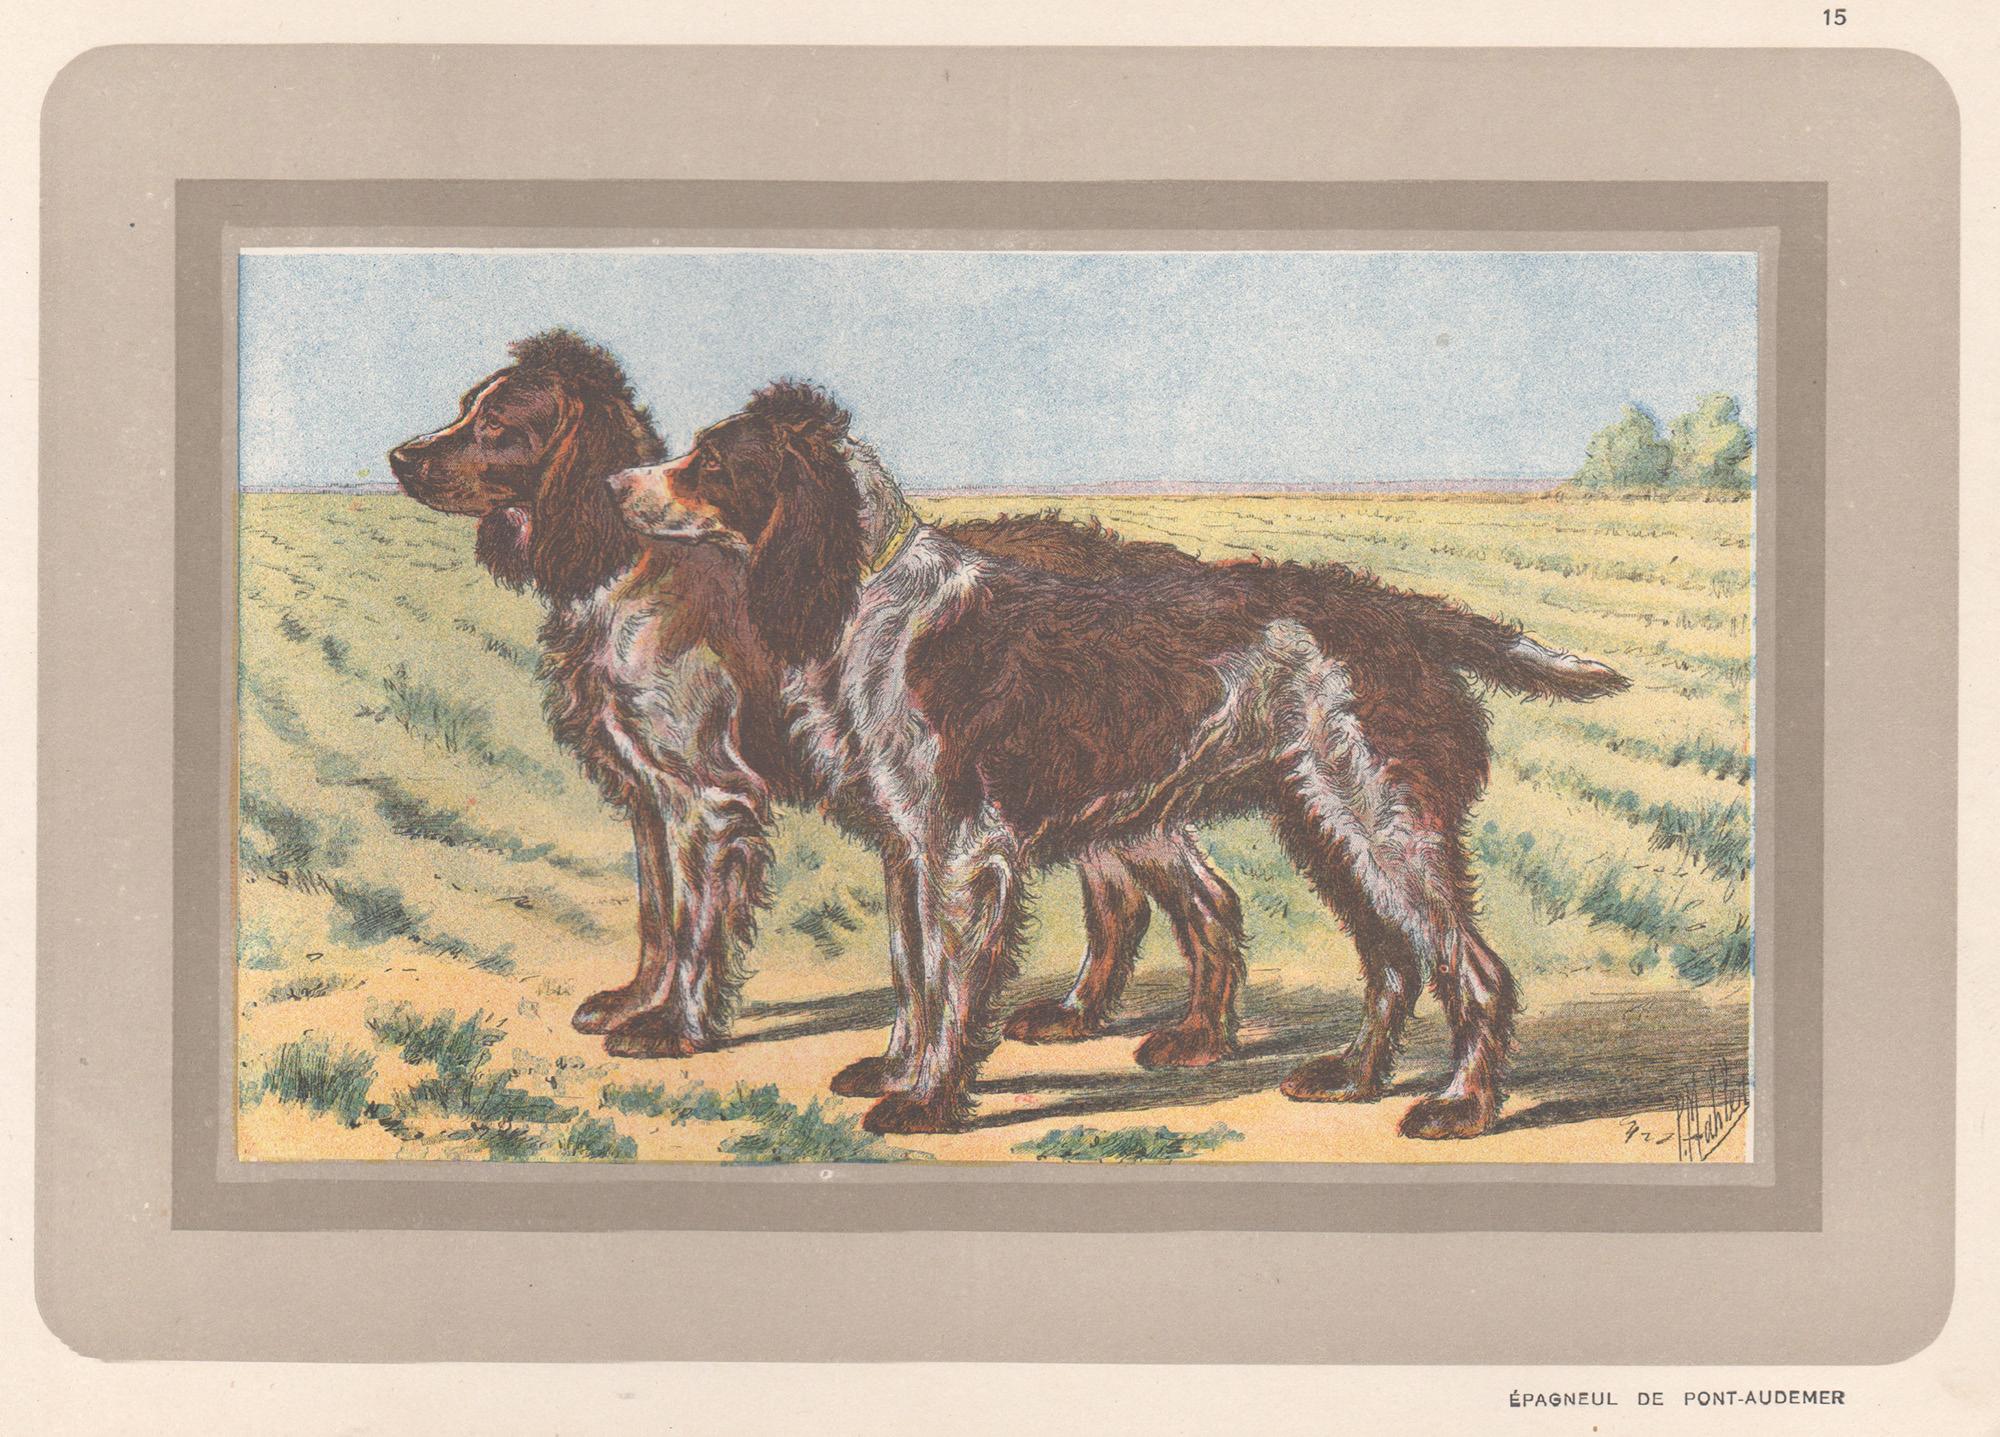 P. Mahler Animal Print - Pont-Audemer Spaniel, French hound dog chromolithograph print, 1930s